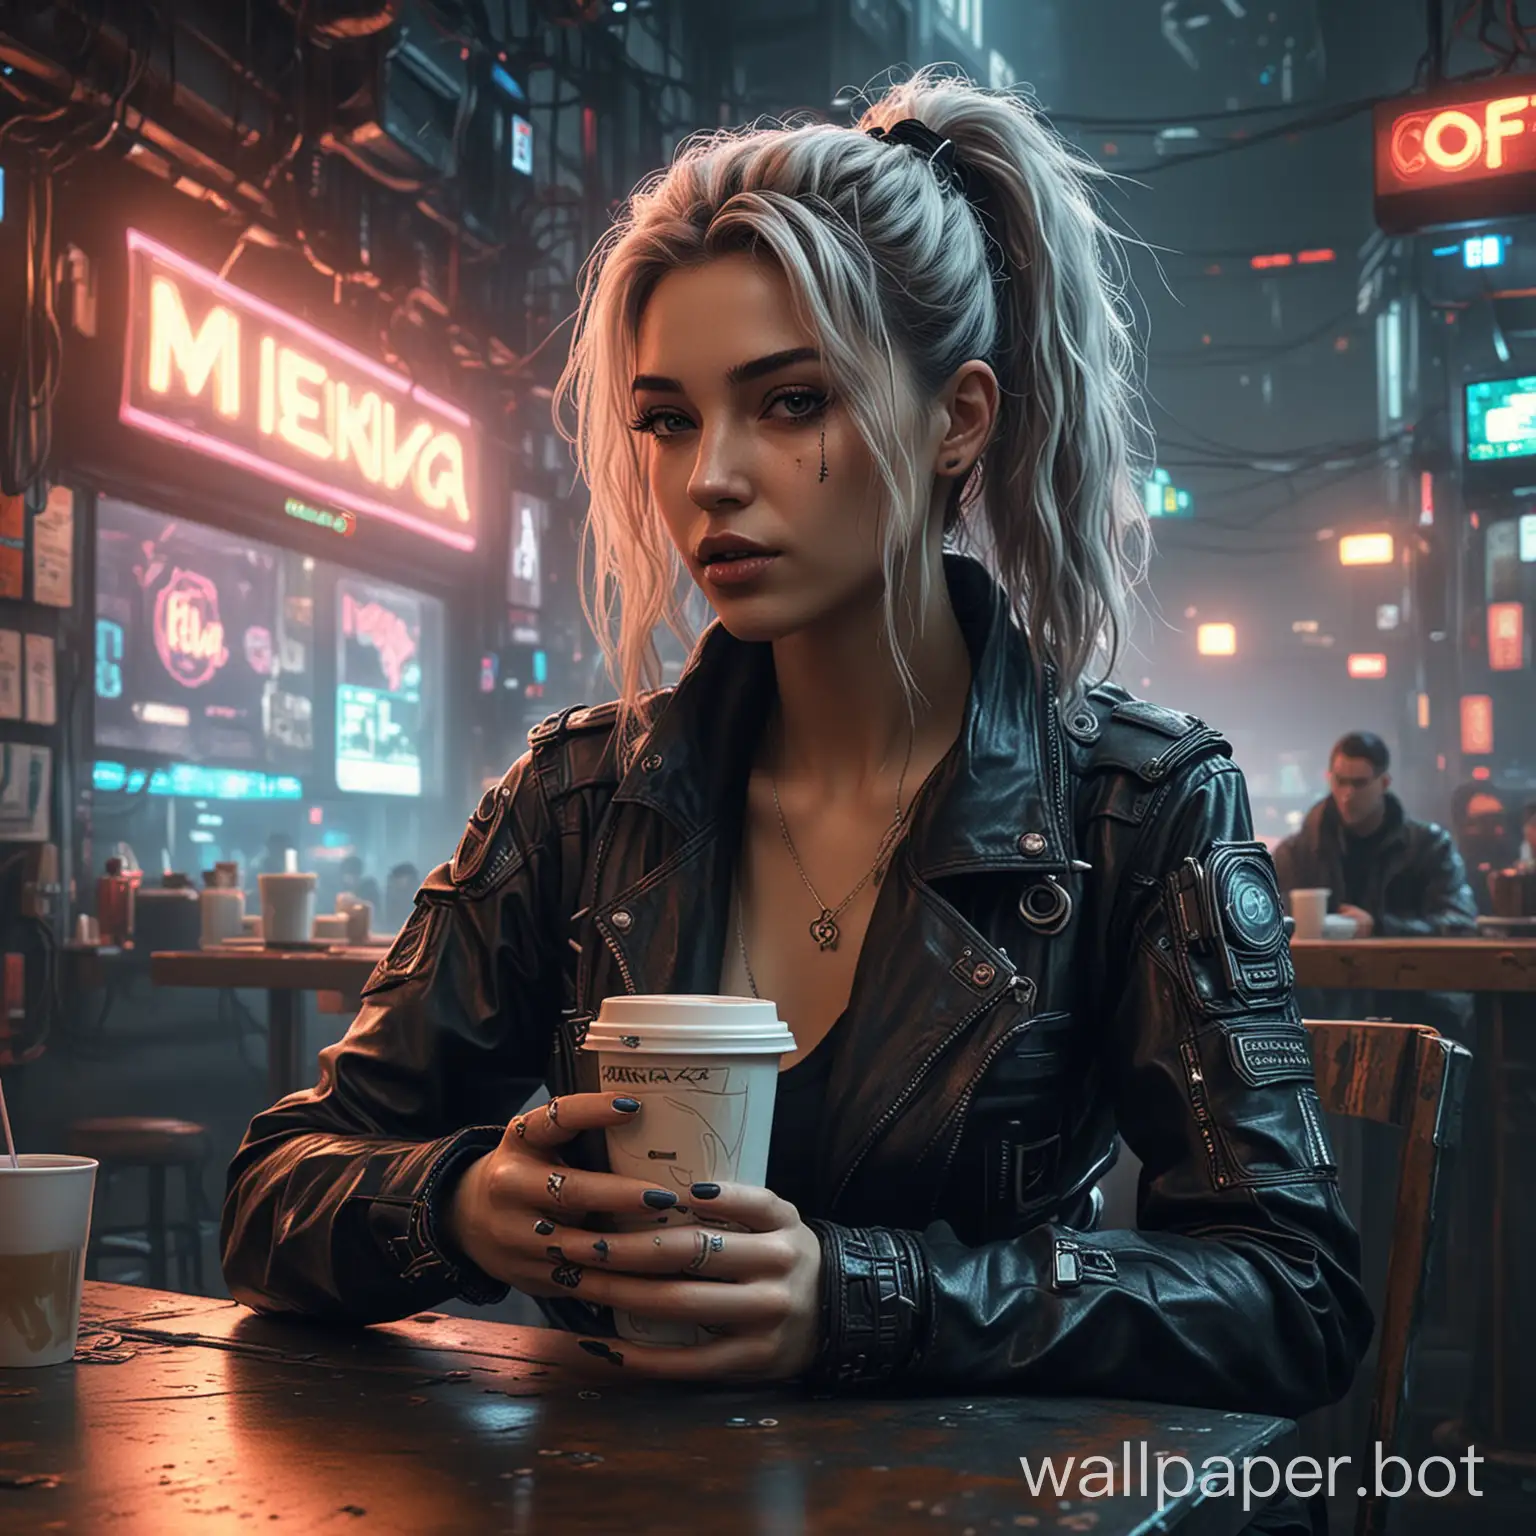 Mia Malkoca in a cyberpunk setting drinking coffee